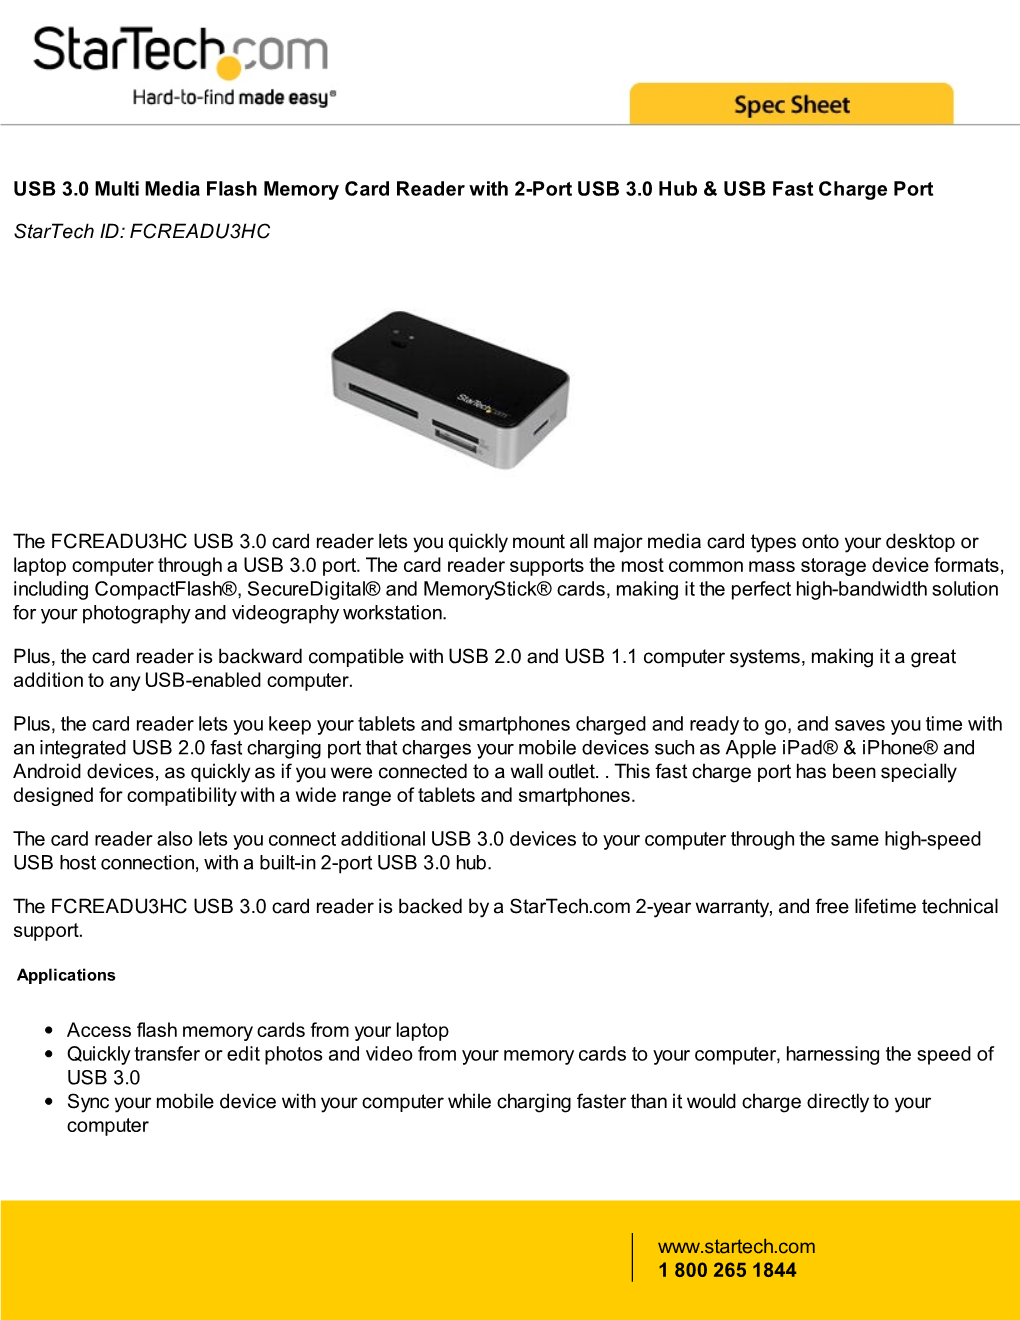 USB 3.0 Multi Media Flash Memory Card Reader with 2-Port USB 3.0 Hub & USB Fast Charge Port